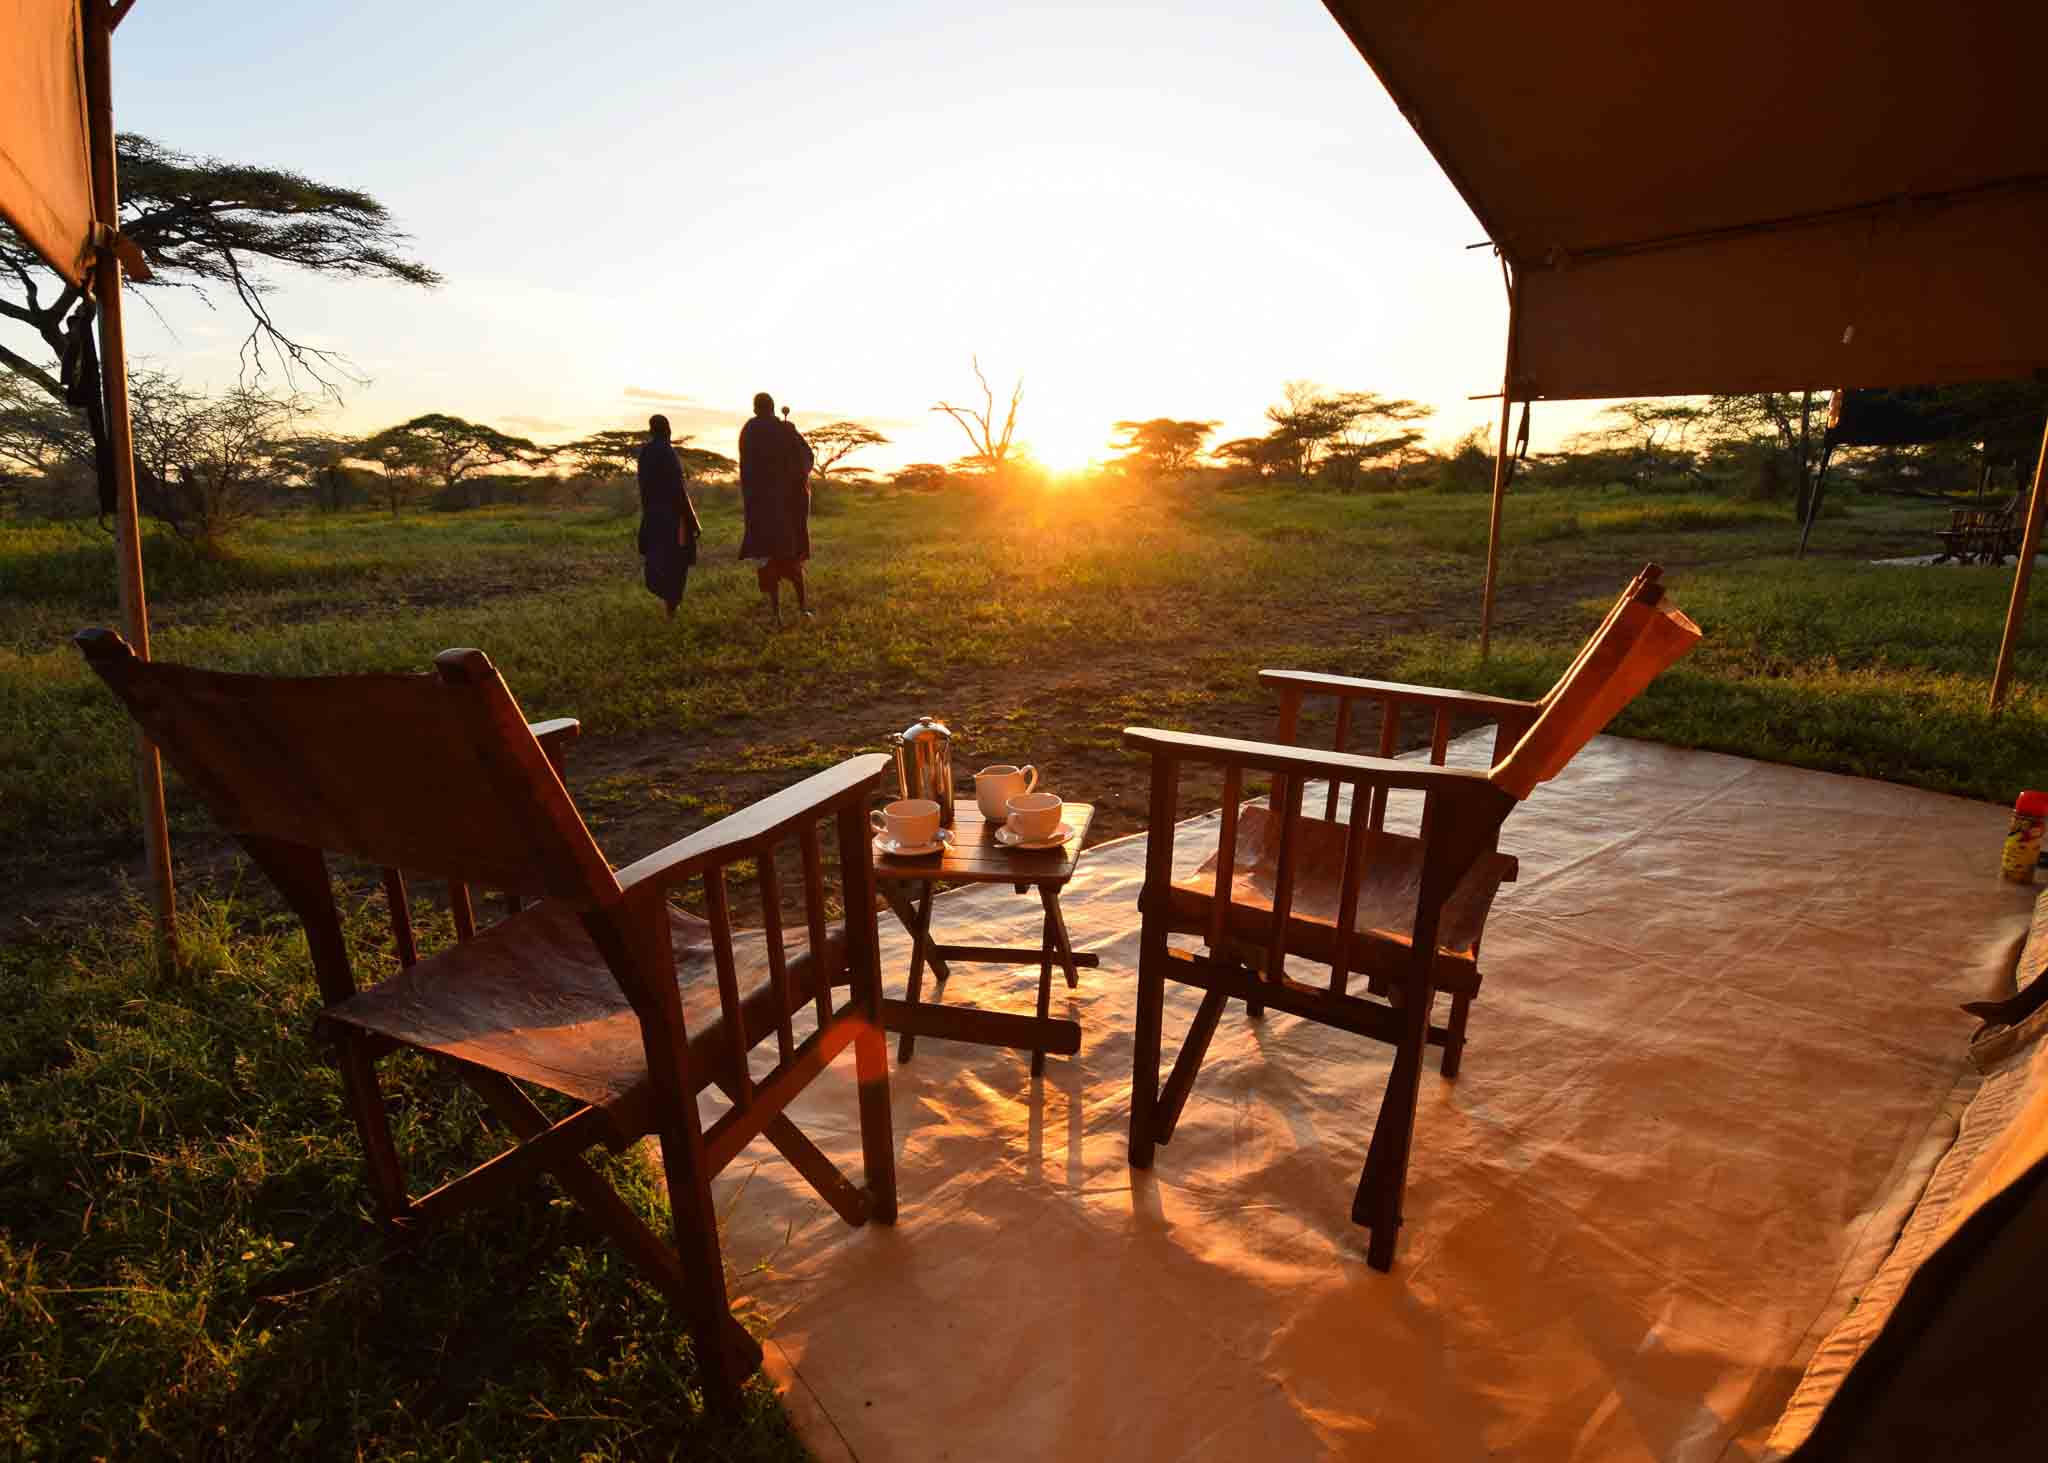 tingitana tented camp, serengeti, tanzania